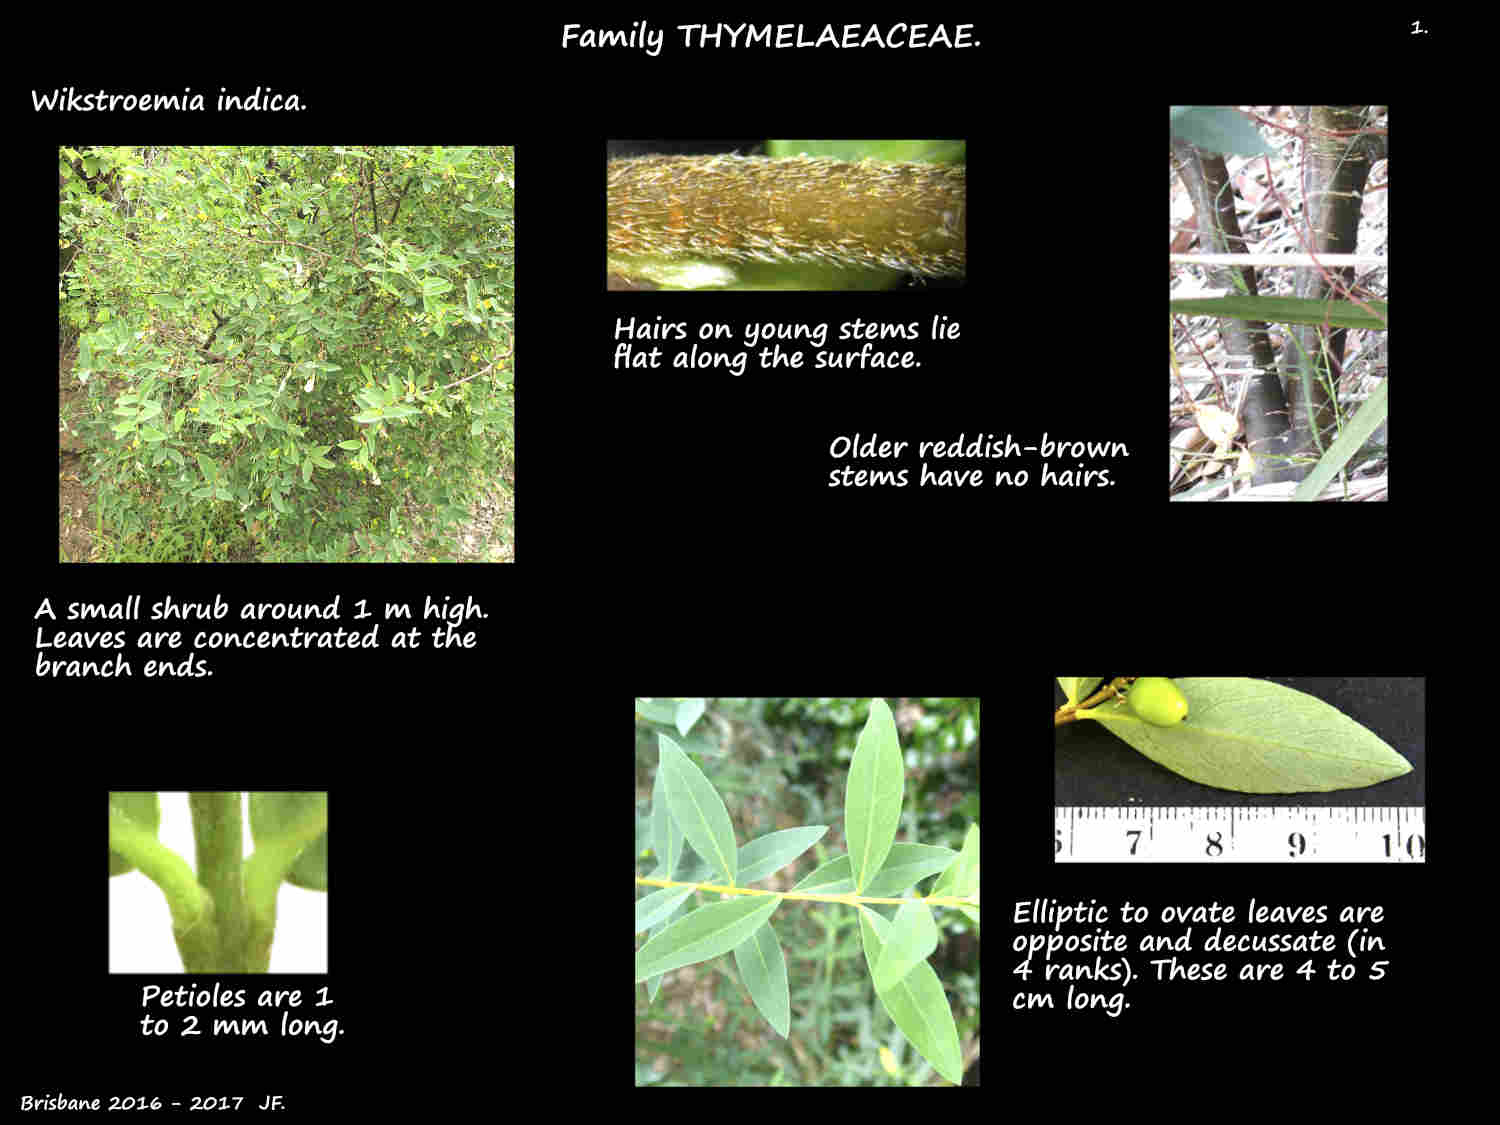 1 Wikstroemia indica shrub & leaves